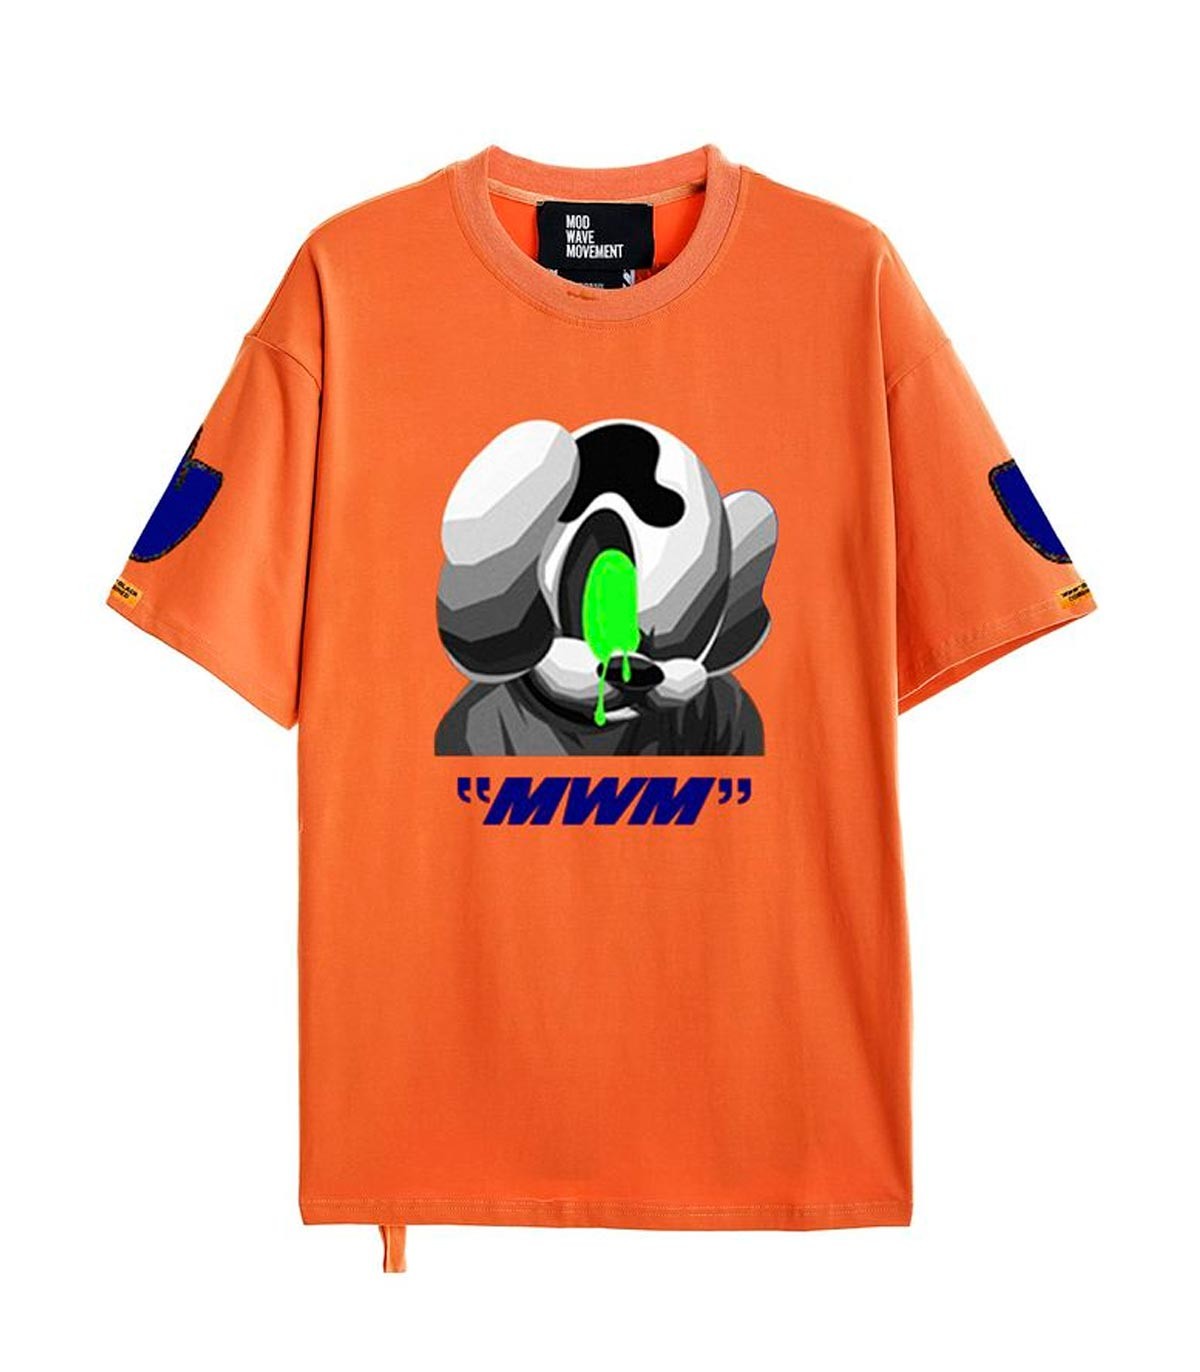 Mod Wave Movement - Camiseta Vanguards Dog Capsule T-S - Naranja